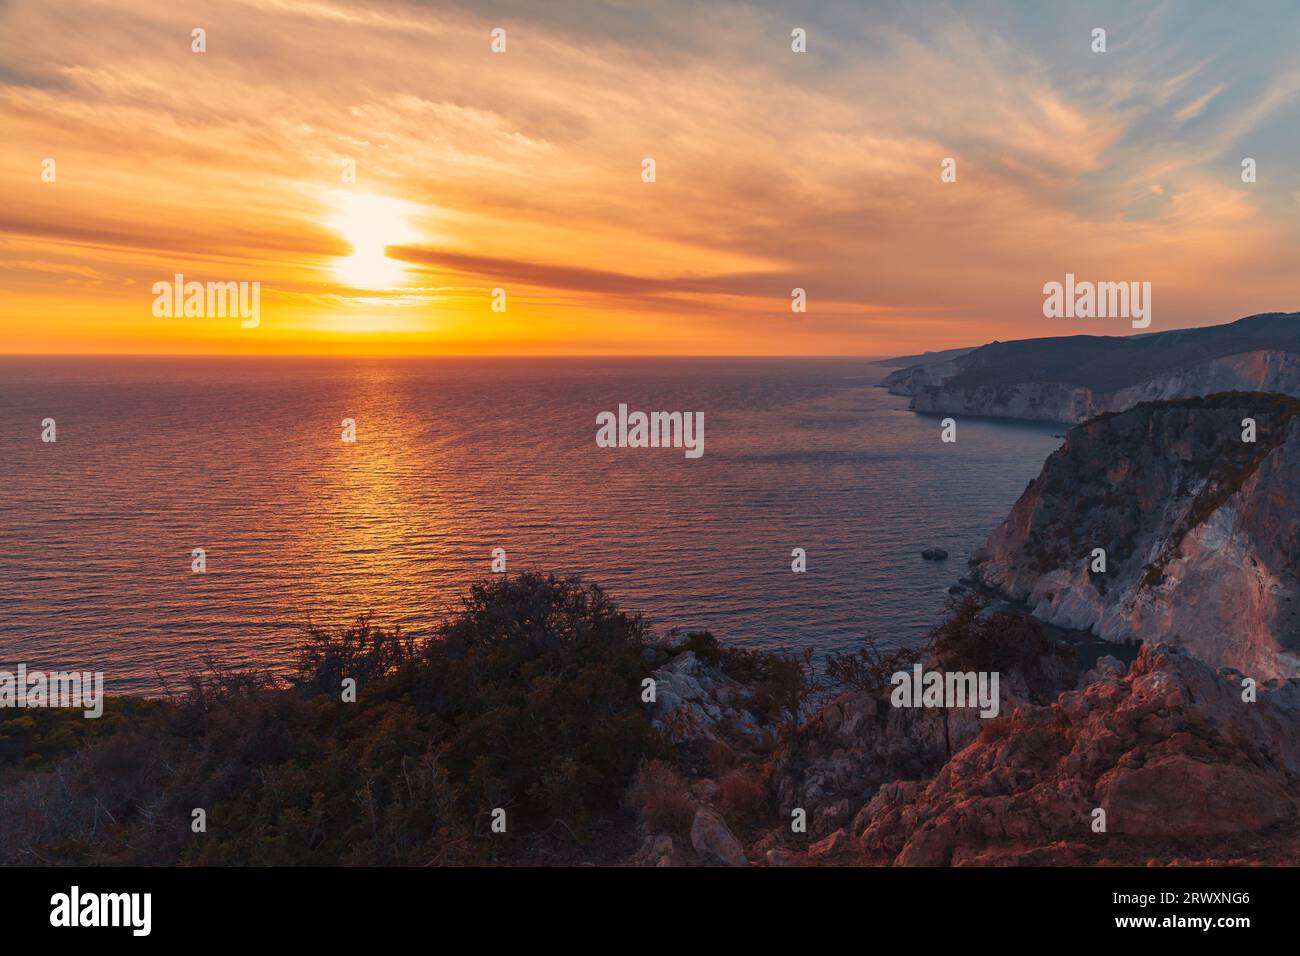 Farbenfroher Sonnenuntergang am Kap Keri, griechische Insel Zakynthos im Ionischen Meer Stockfoto